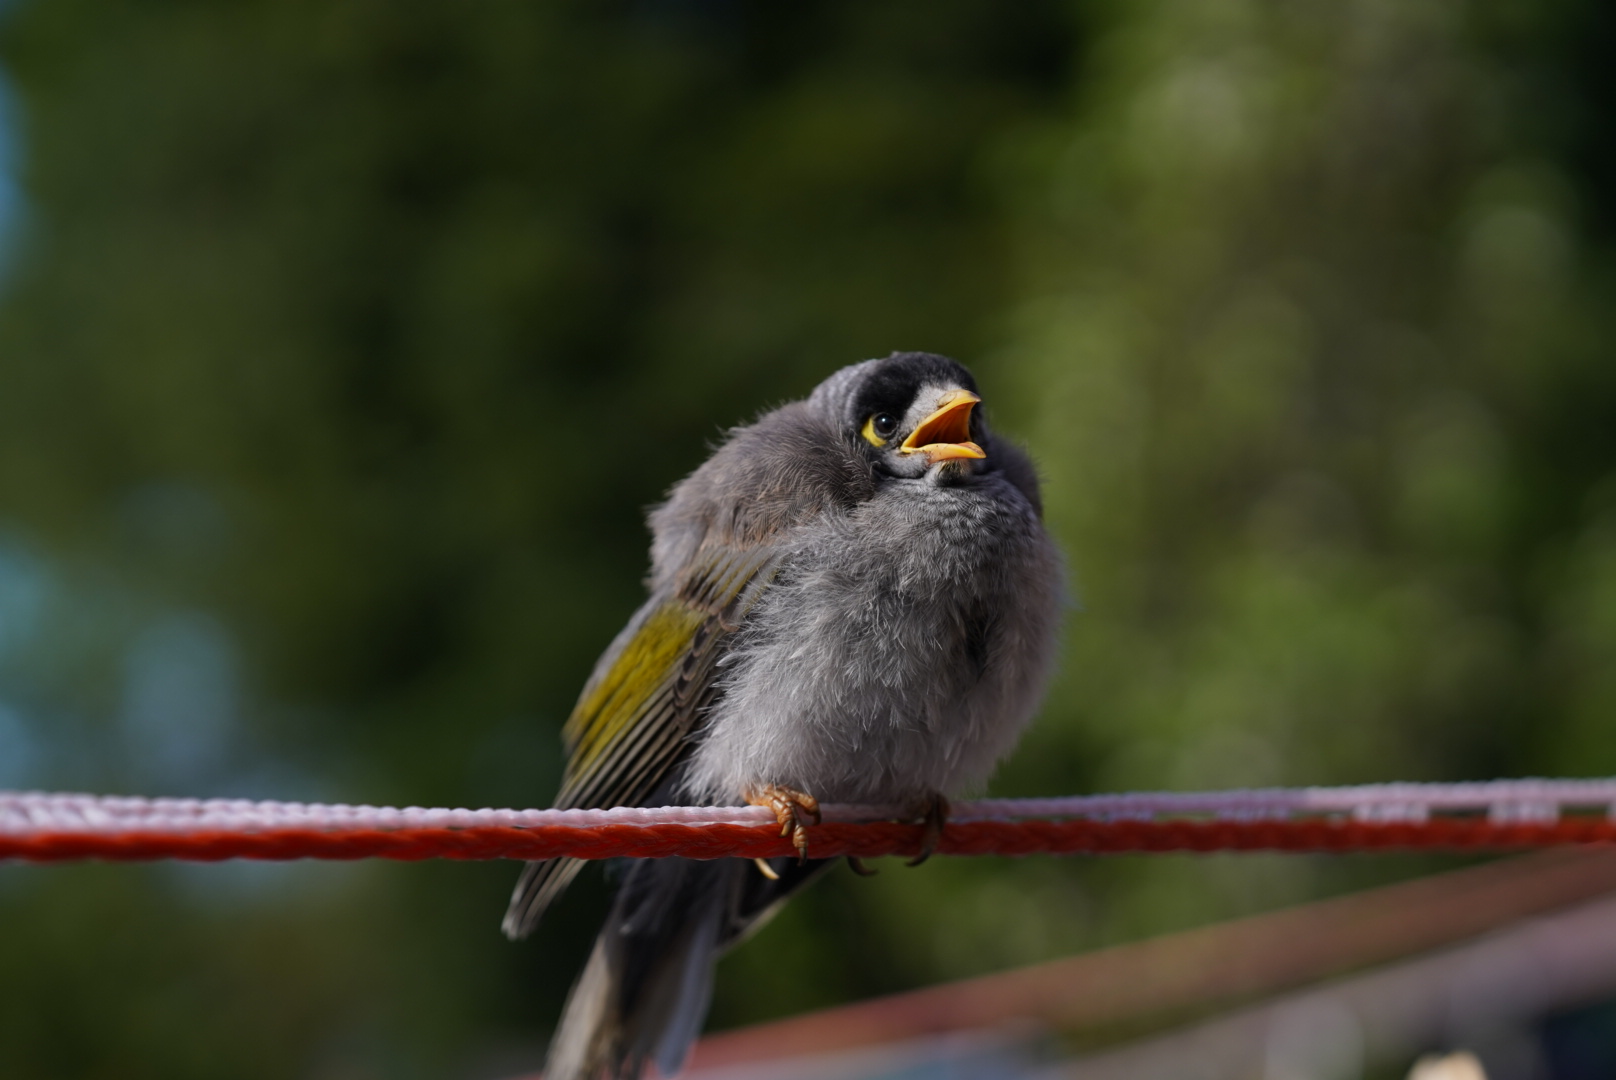 Bird chirping. Photo by Donna Wu.